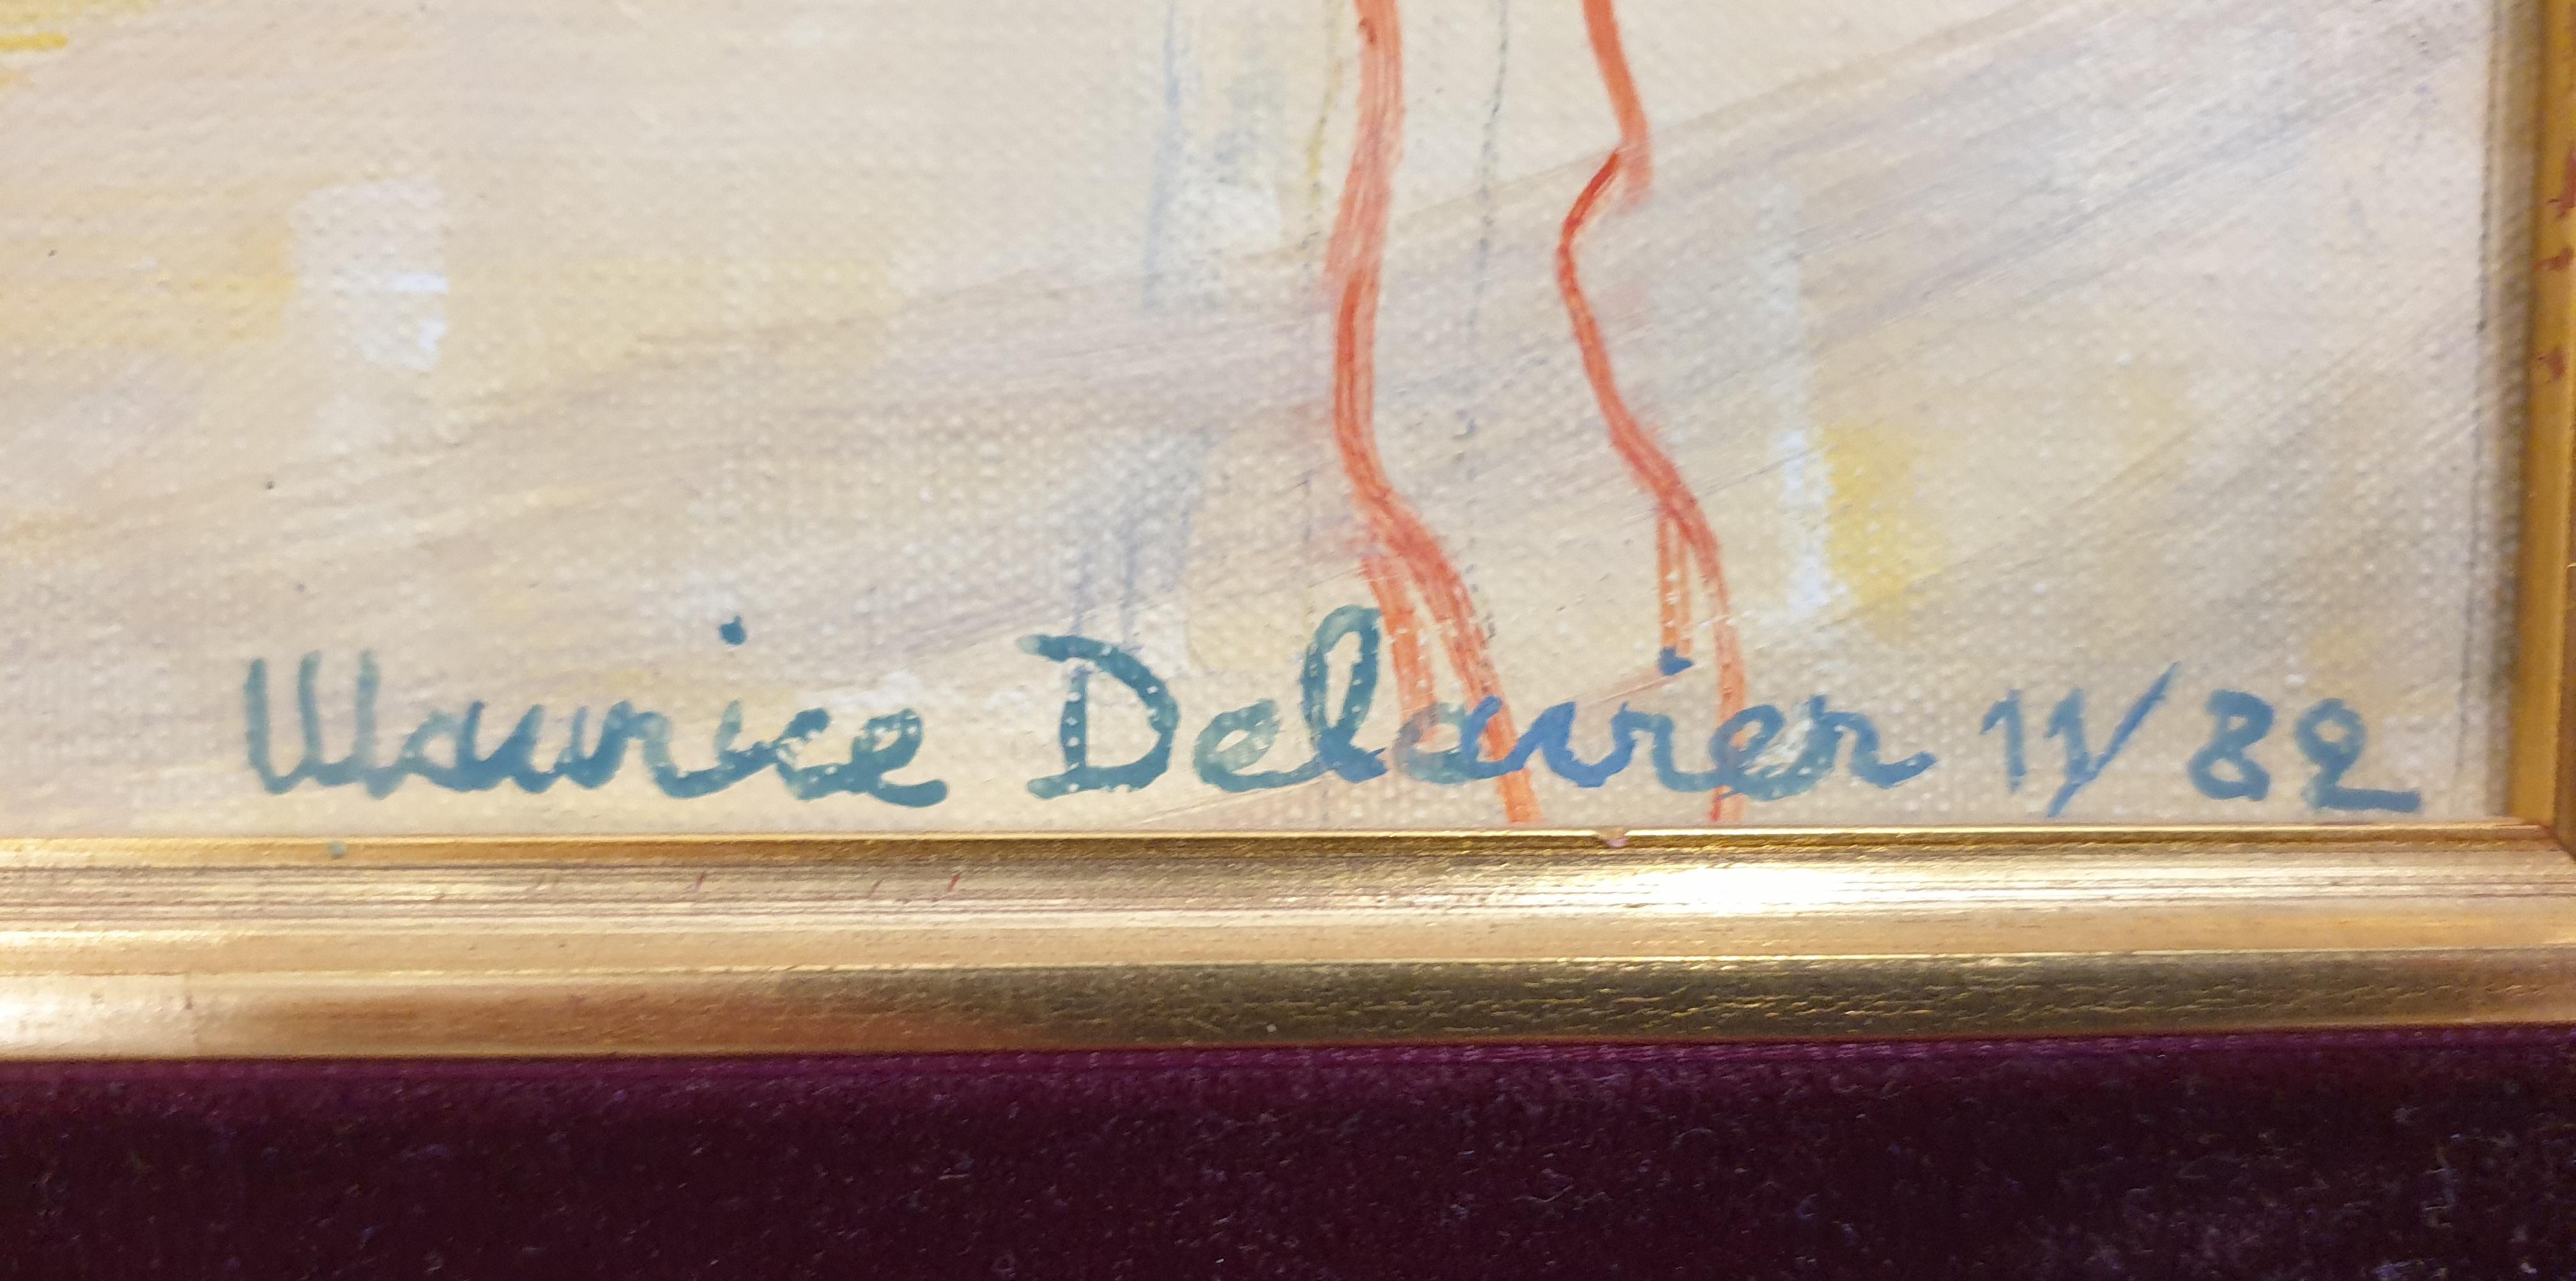 Chattes coquines ! Hommage à Matisse, huile sur toile. - Moderne Painting par Maurice Delavier